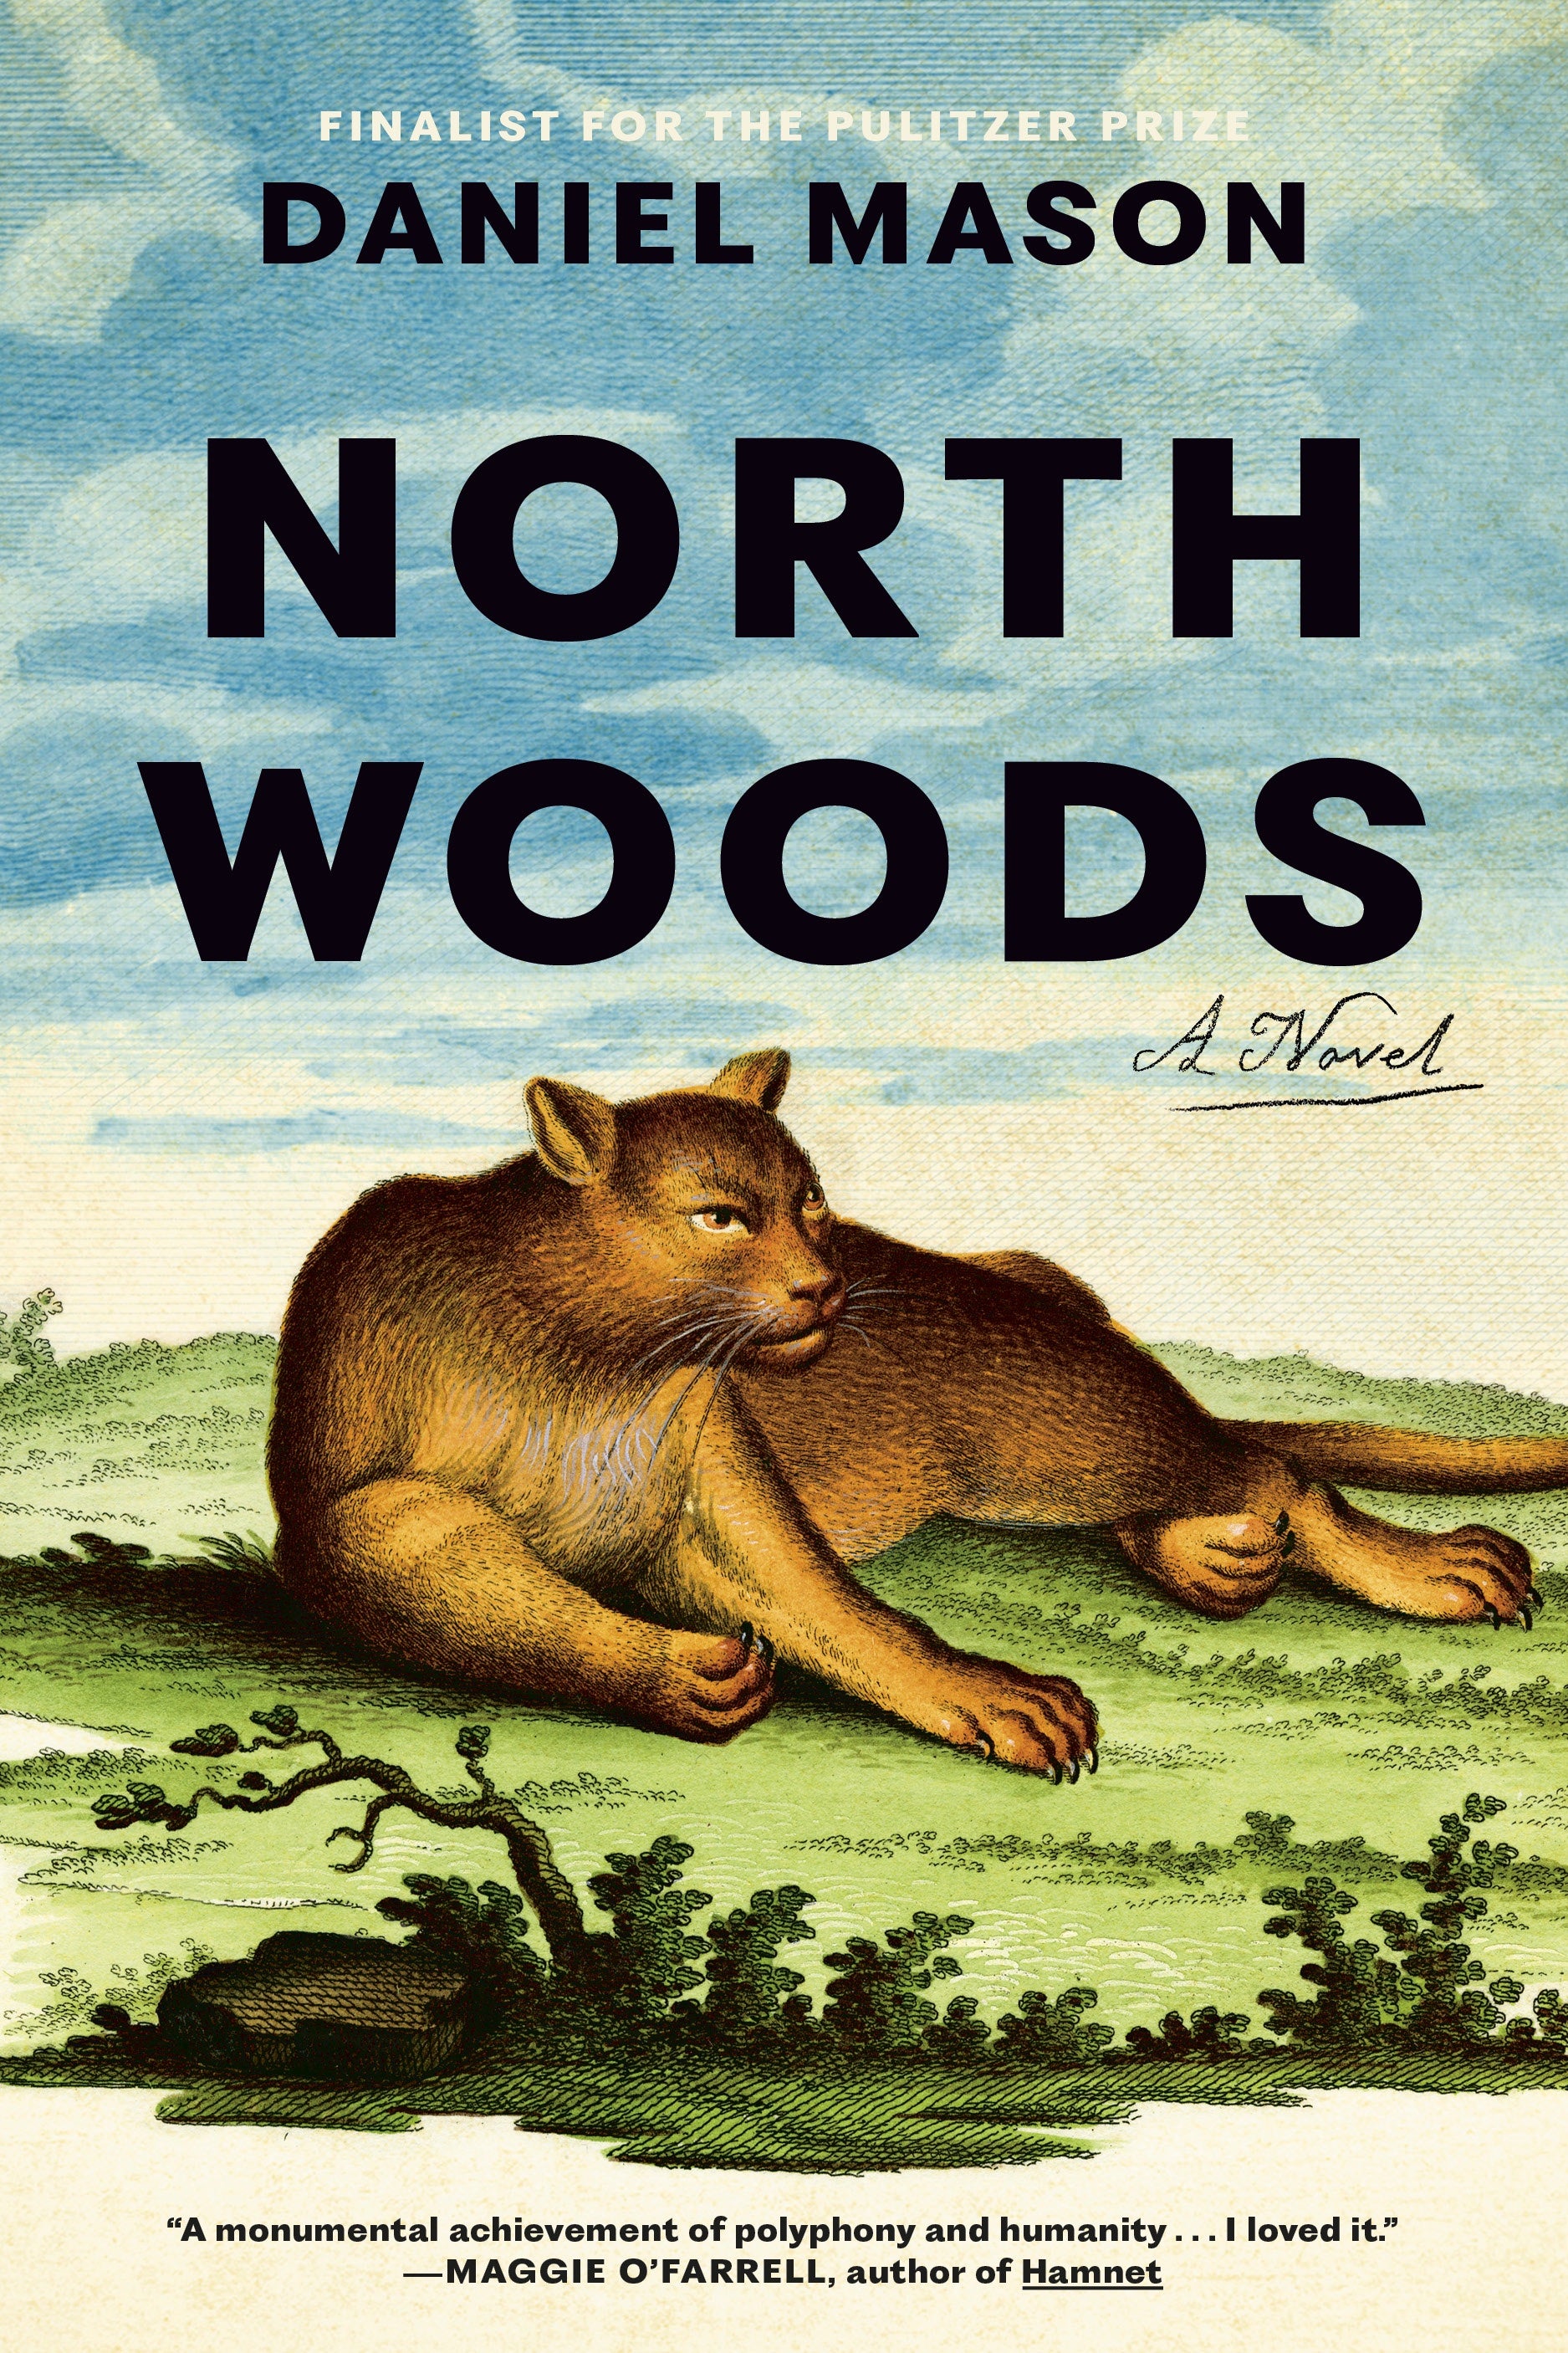 North Woods